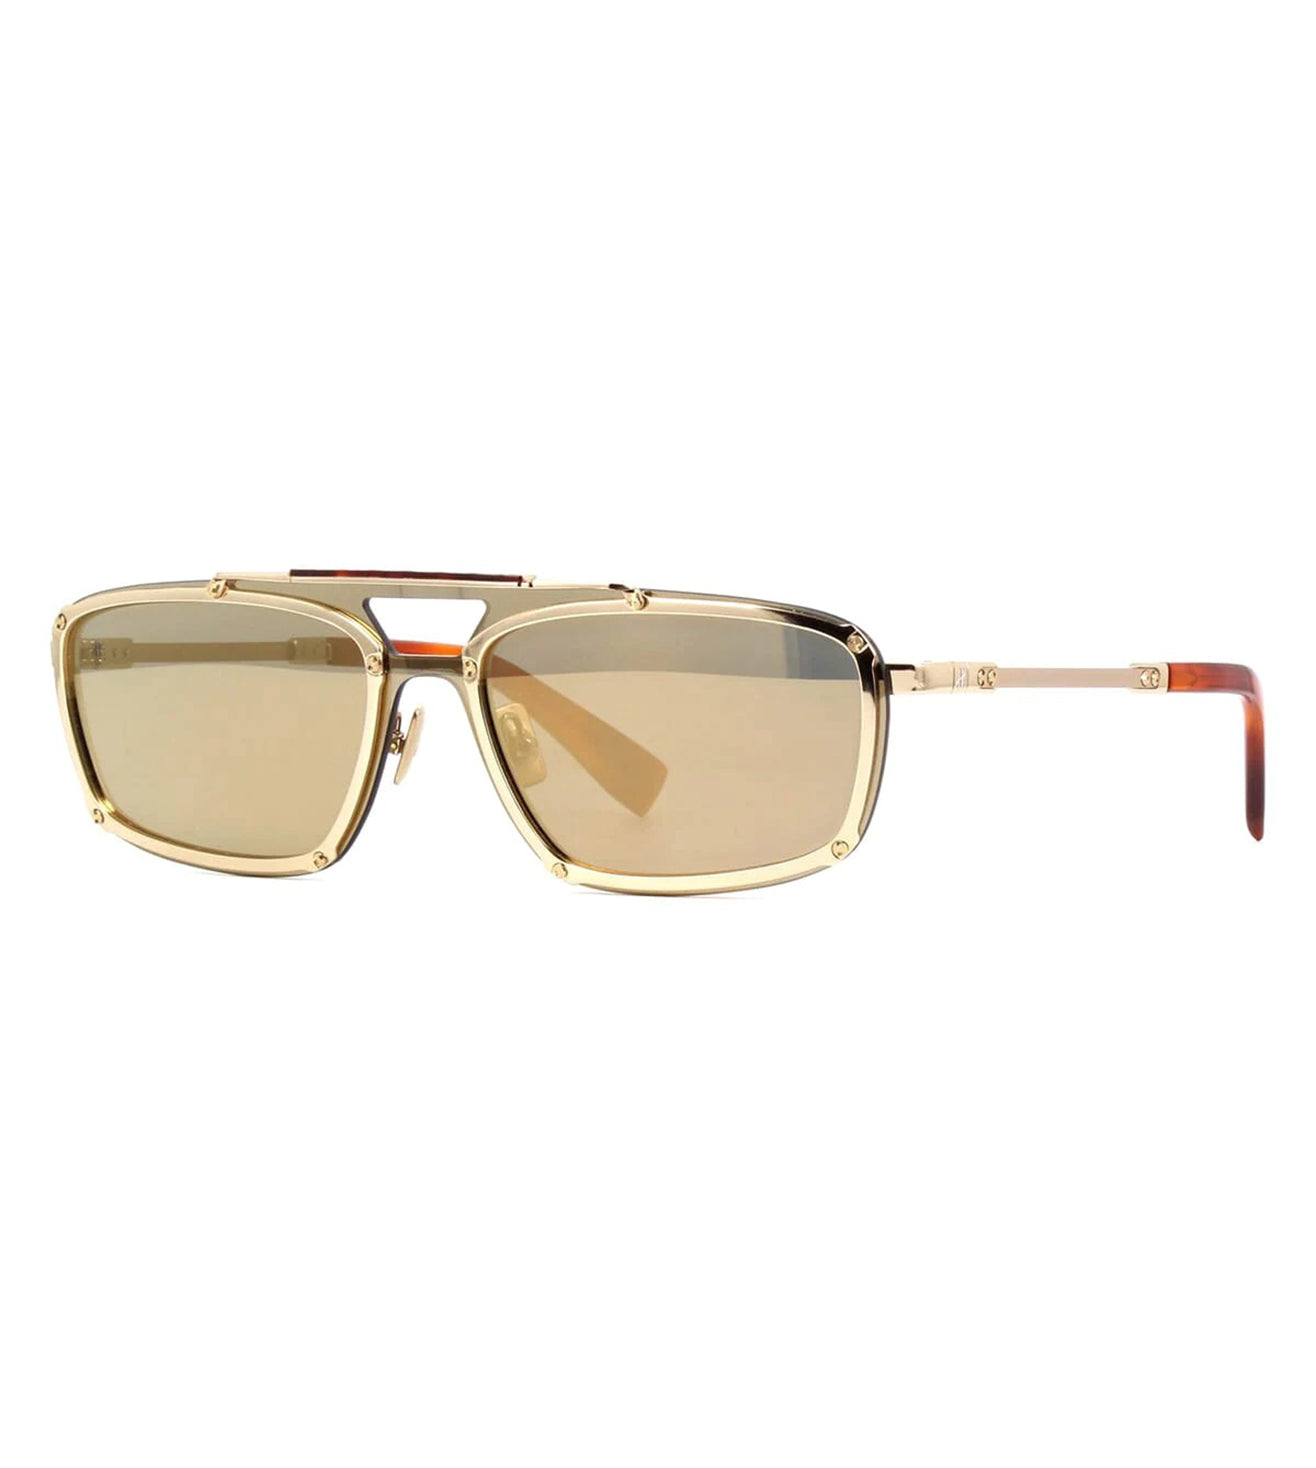 Hublot Unisex Gold Aviator Sunglasses